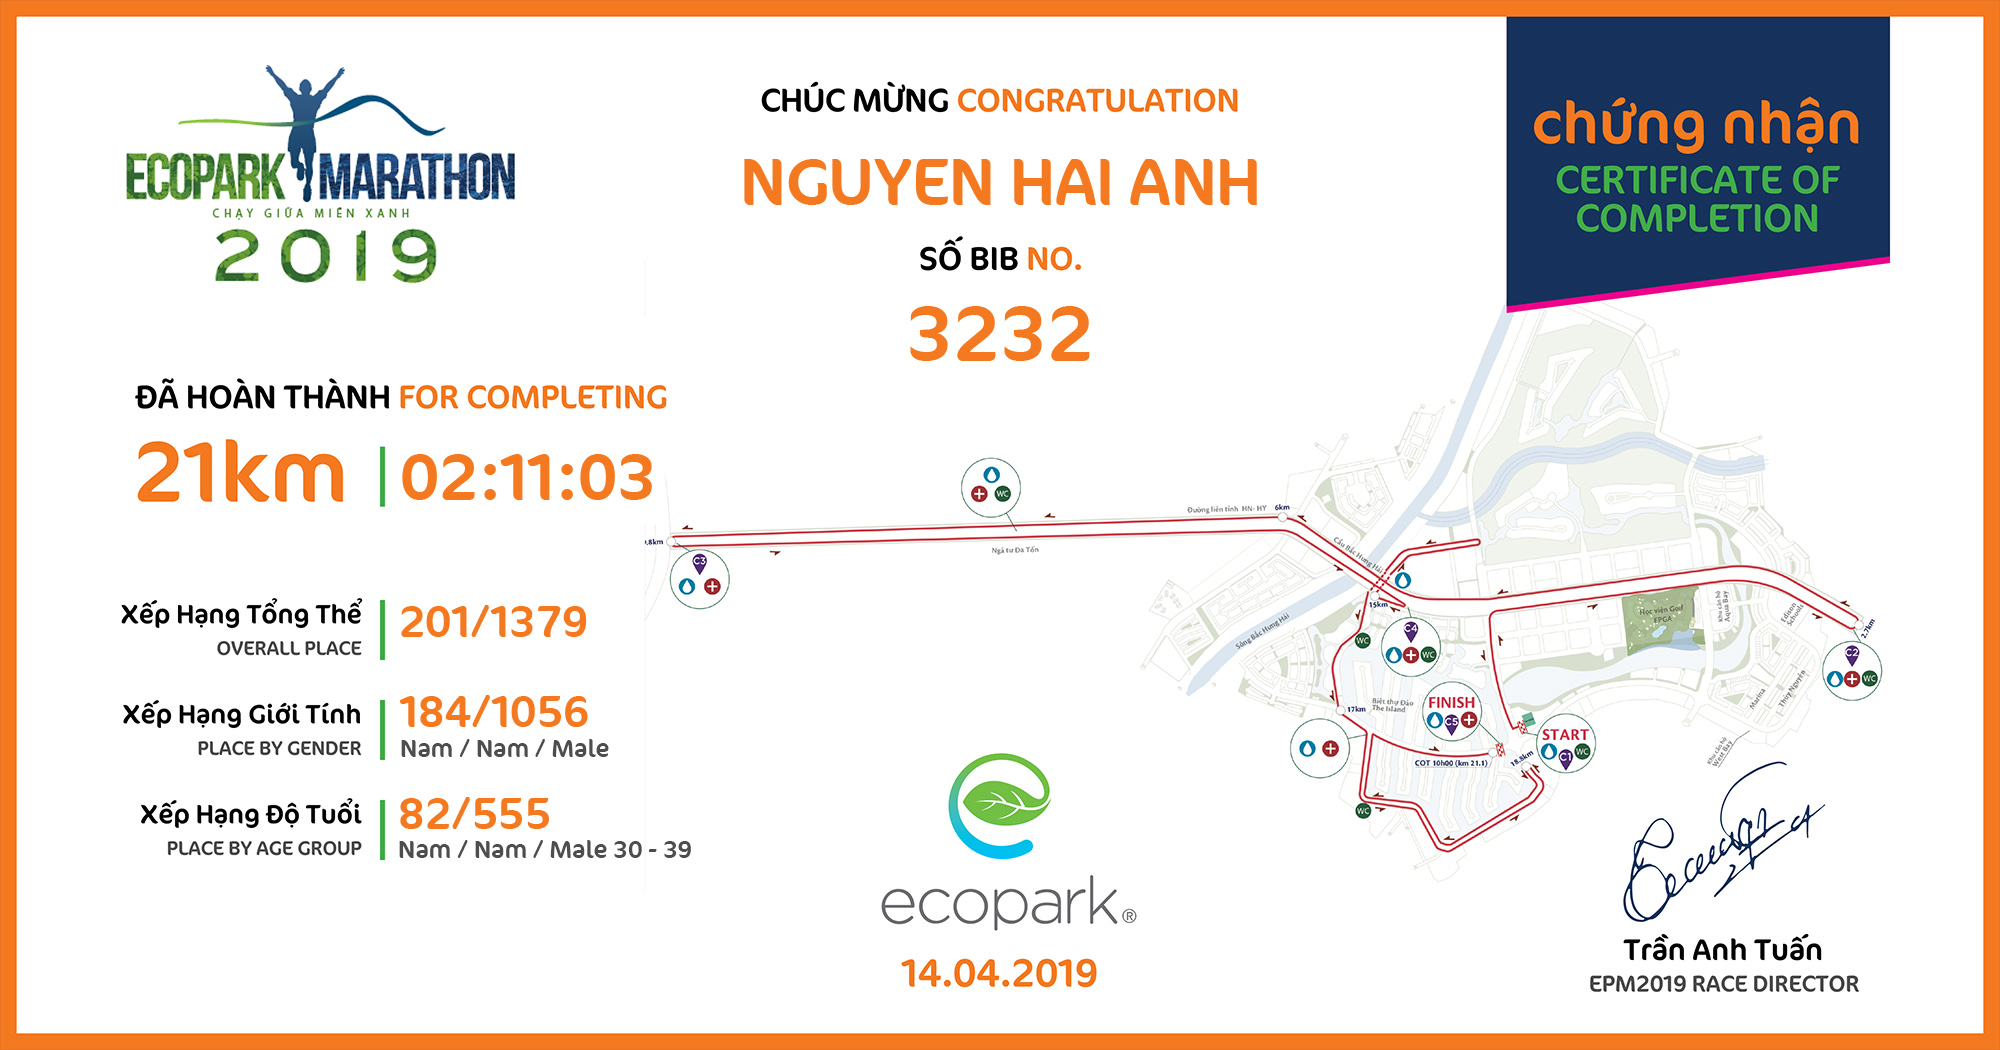 3232 - Nguyen Hai Anh